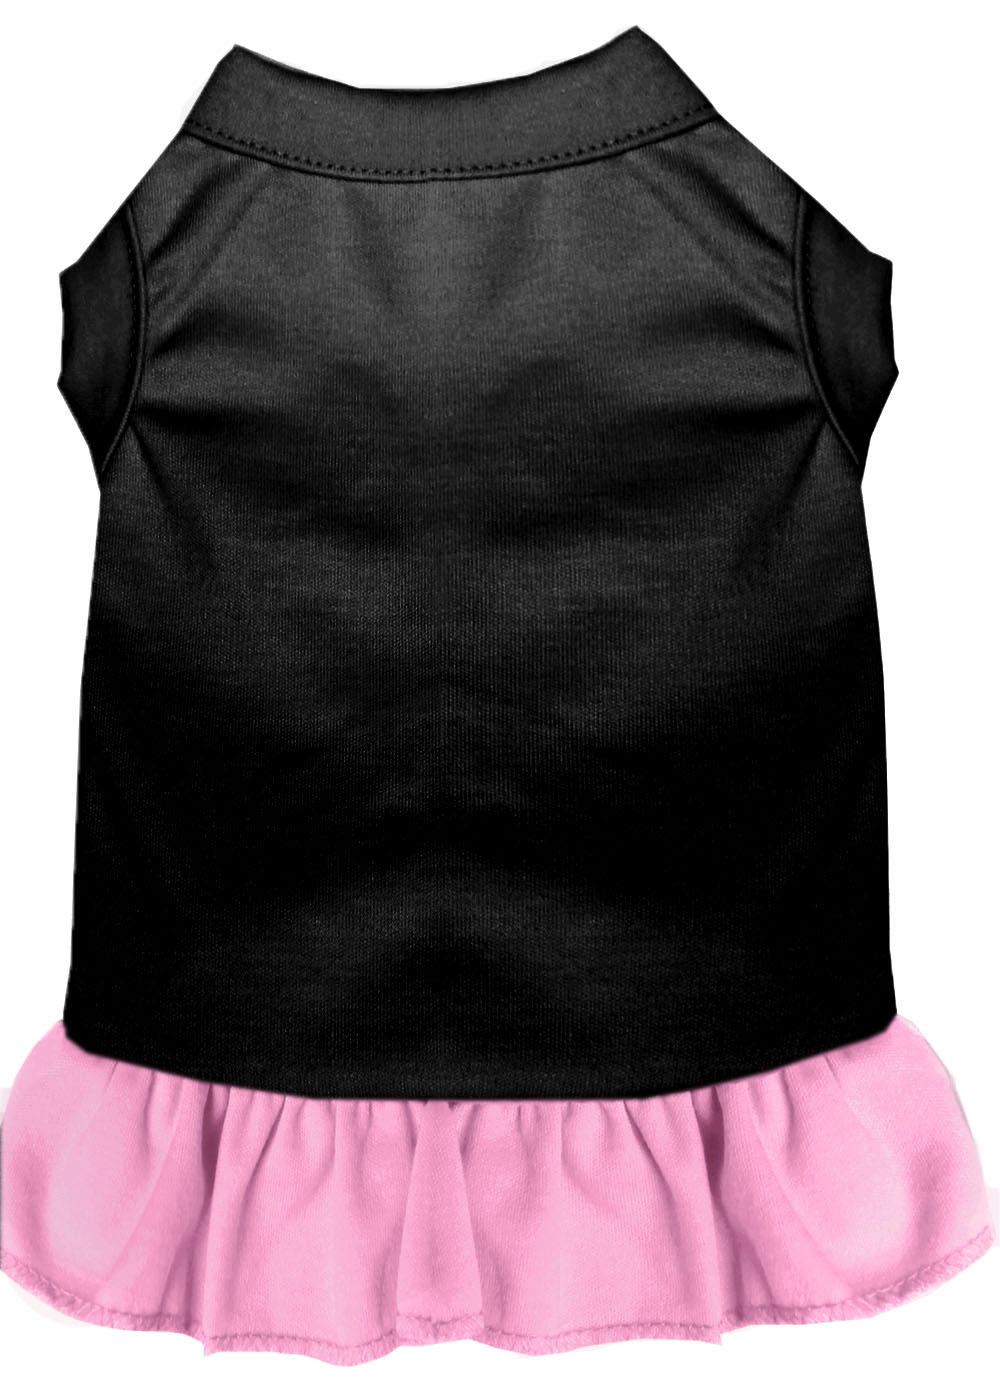 Plain Pet Dress Black with Light Pink Lg